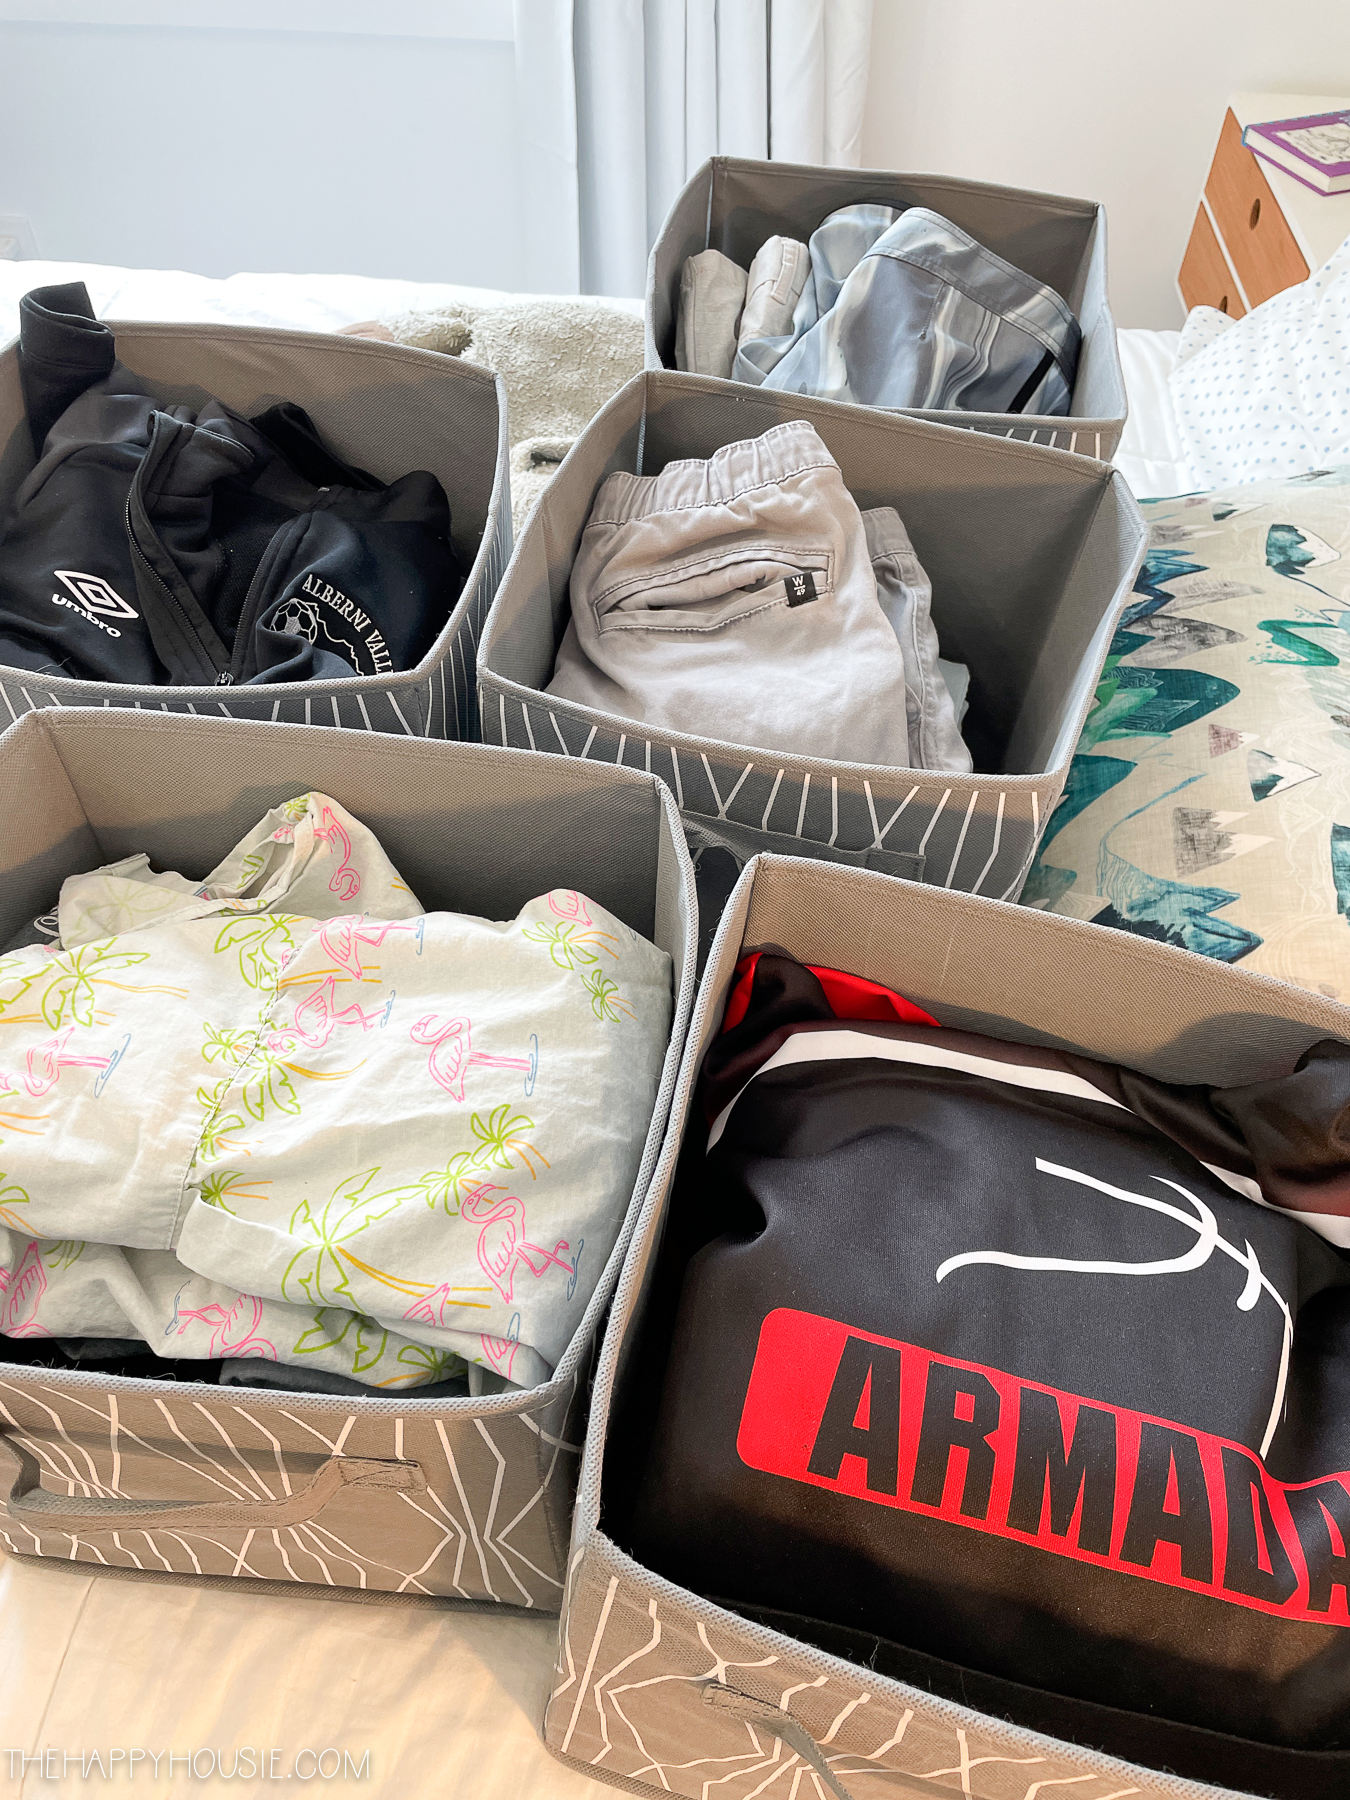 room organization ideas placing next size clothes in bin on upper shelf